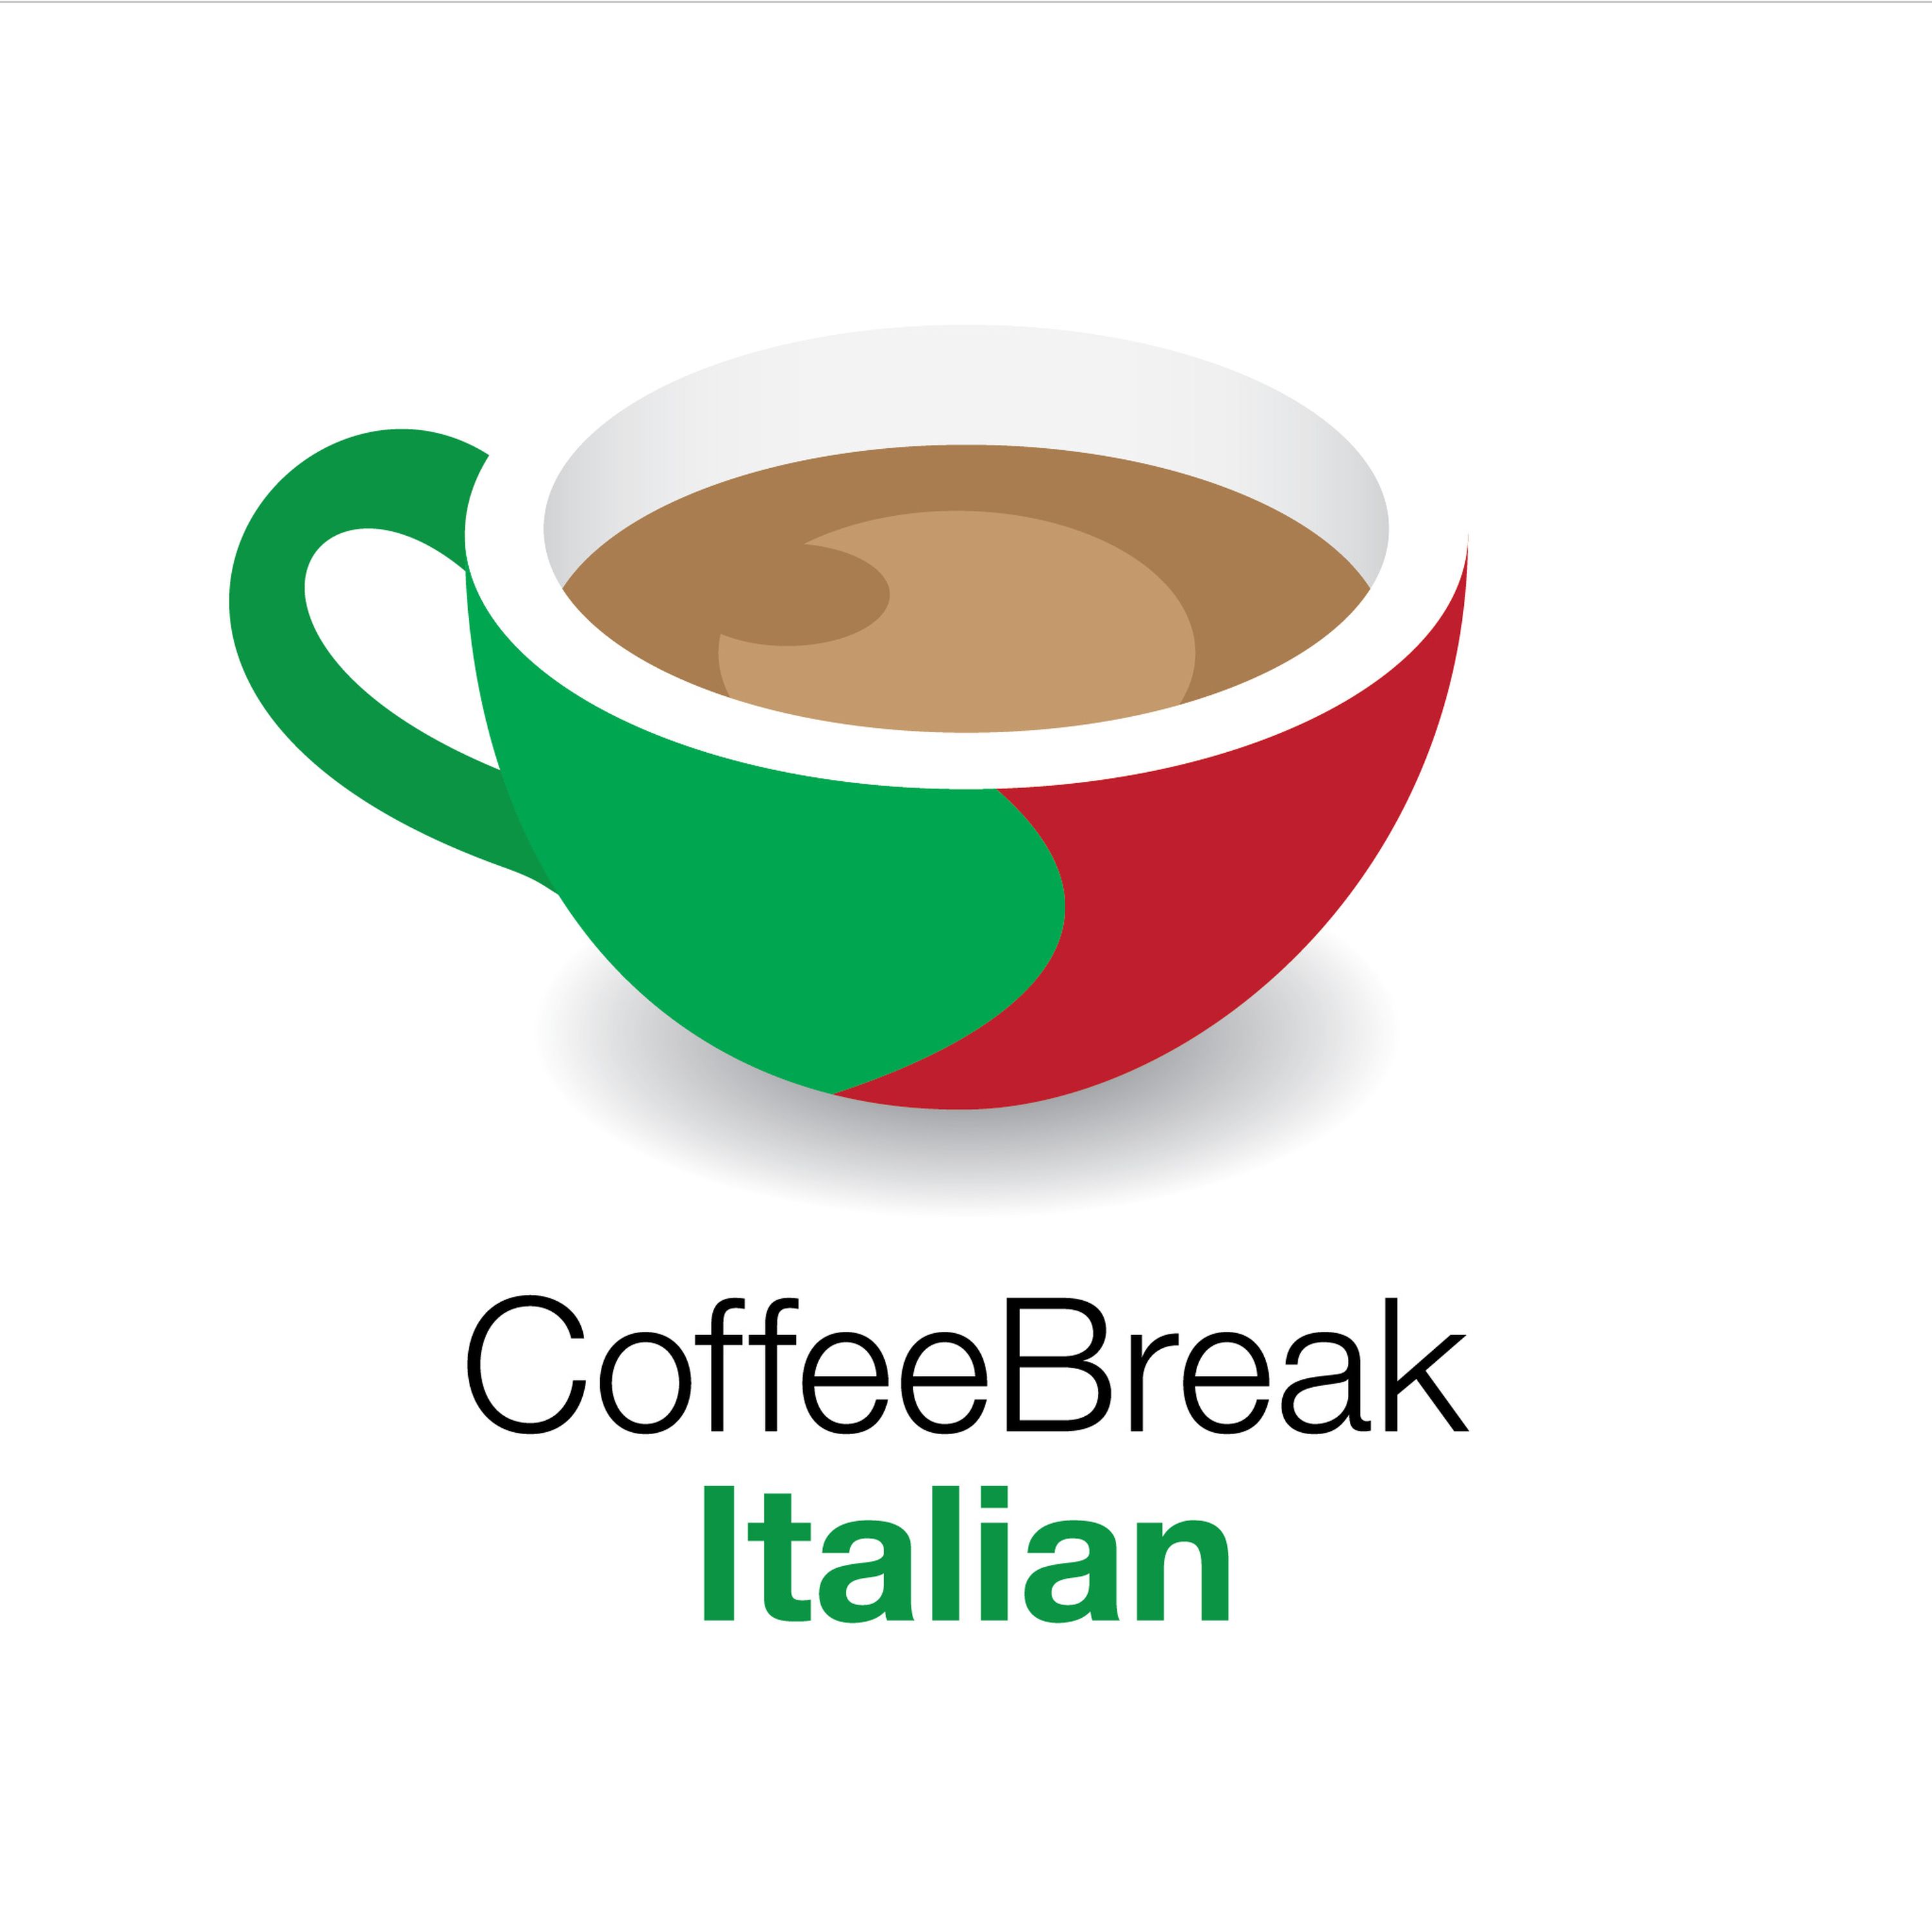 Coffee Break Italian – What you will learn